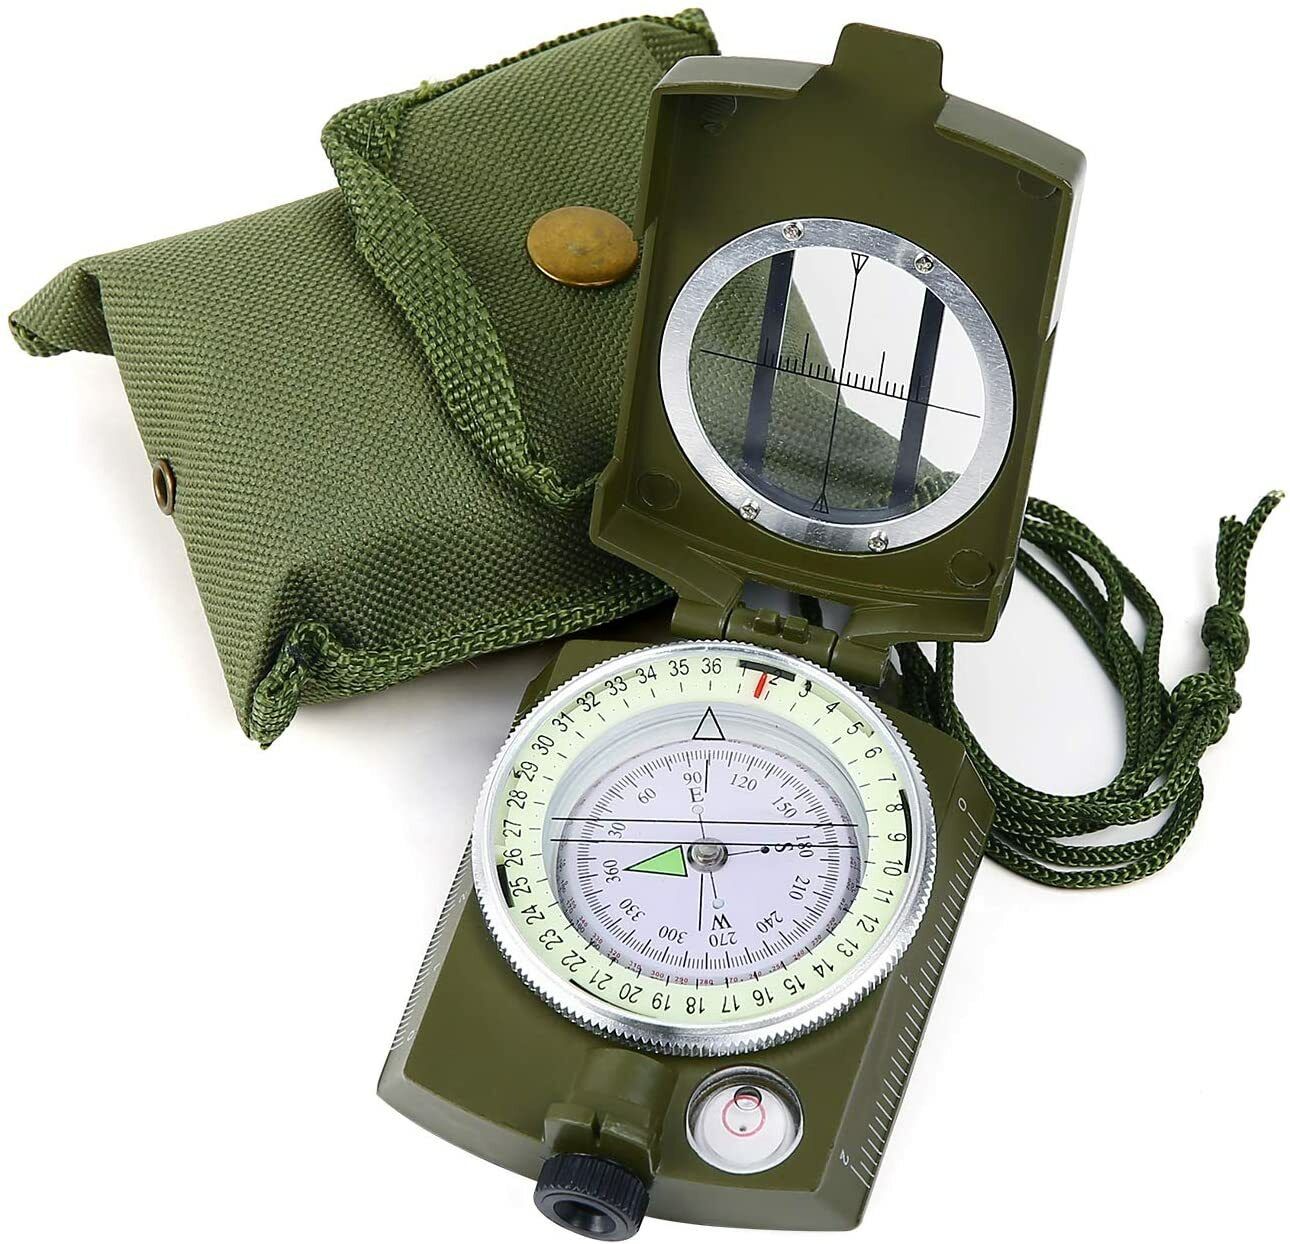 Sportneer Military Lensatic Sighting Camping Compass w/ Carrying Bag Waterproof